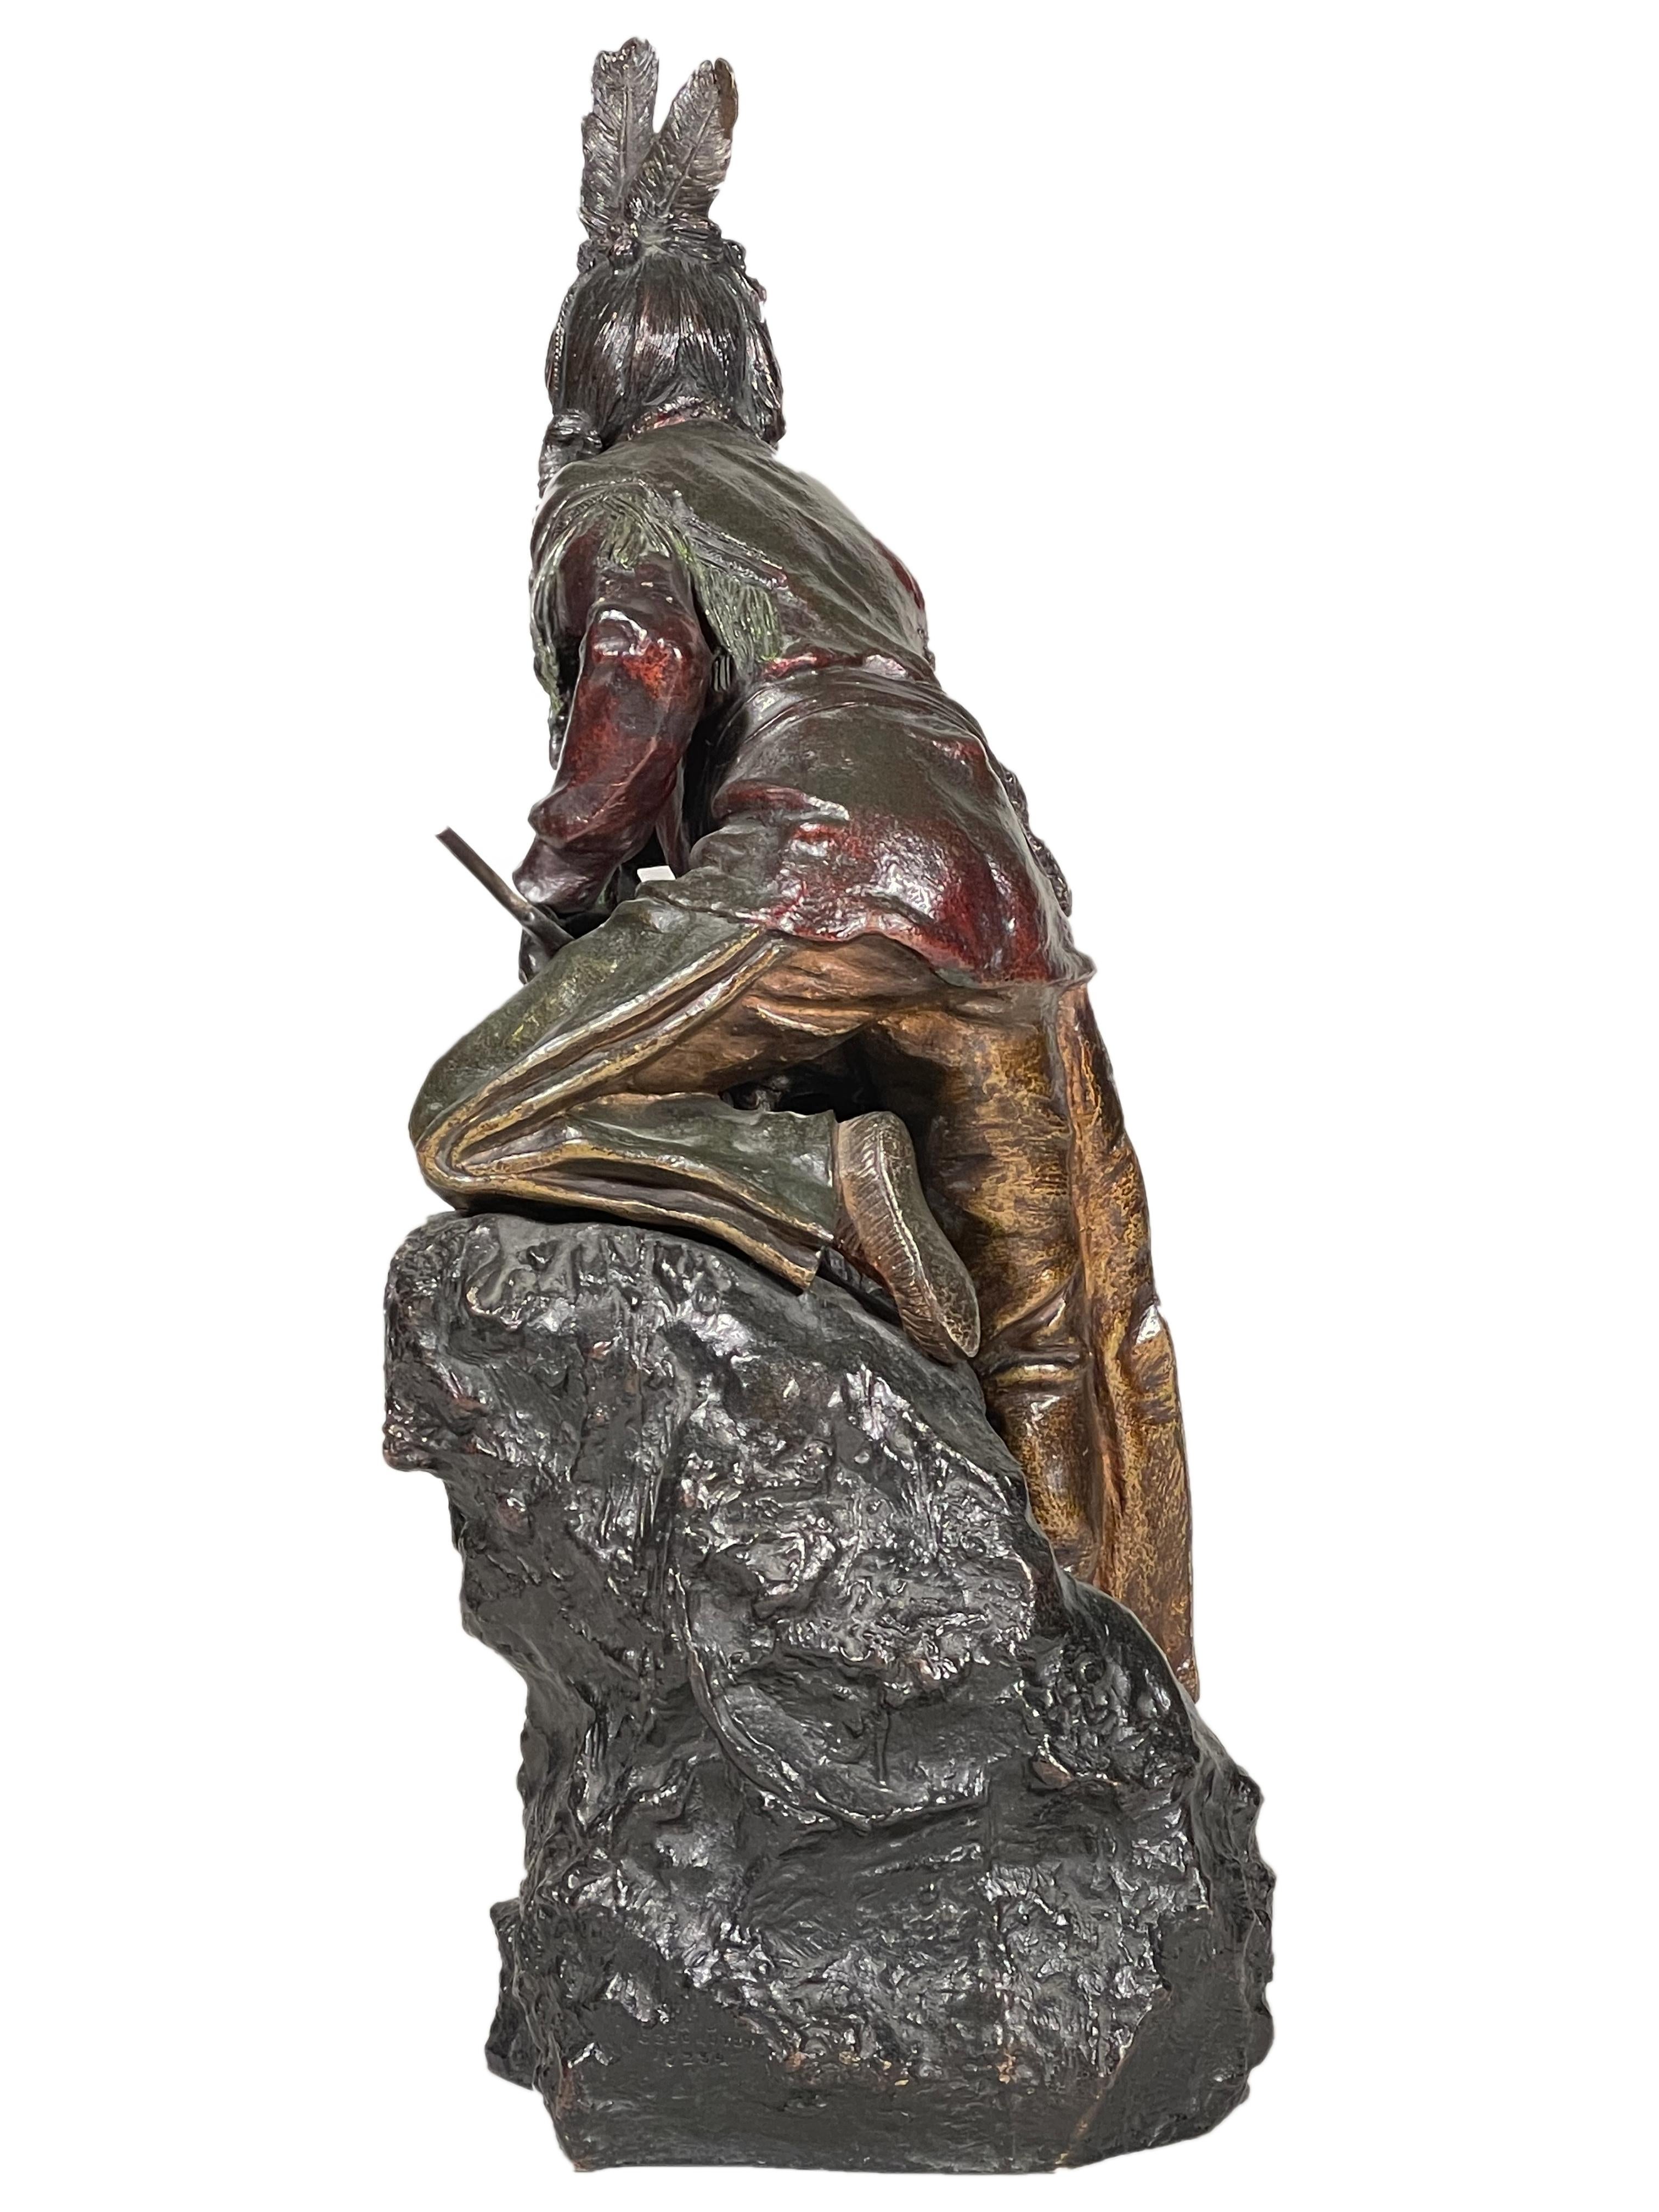 Austrian Art Nouveau American Indian Bronze “The Scout” by, Carl Kauba 1